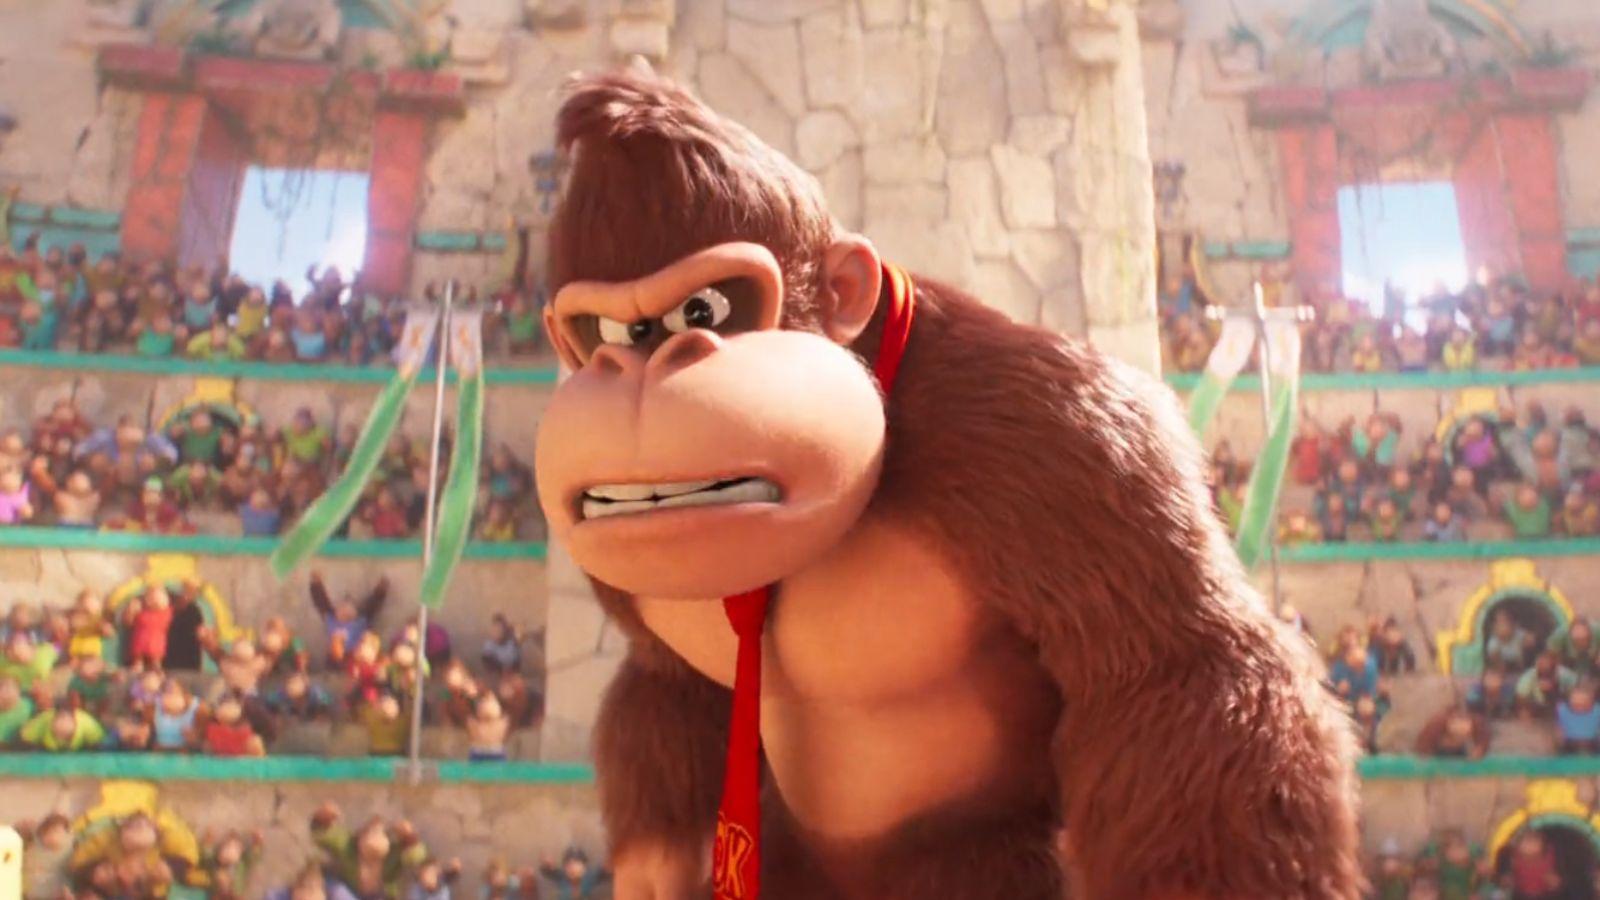 Donkey Kong spinoff